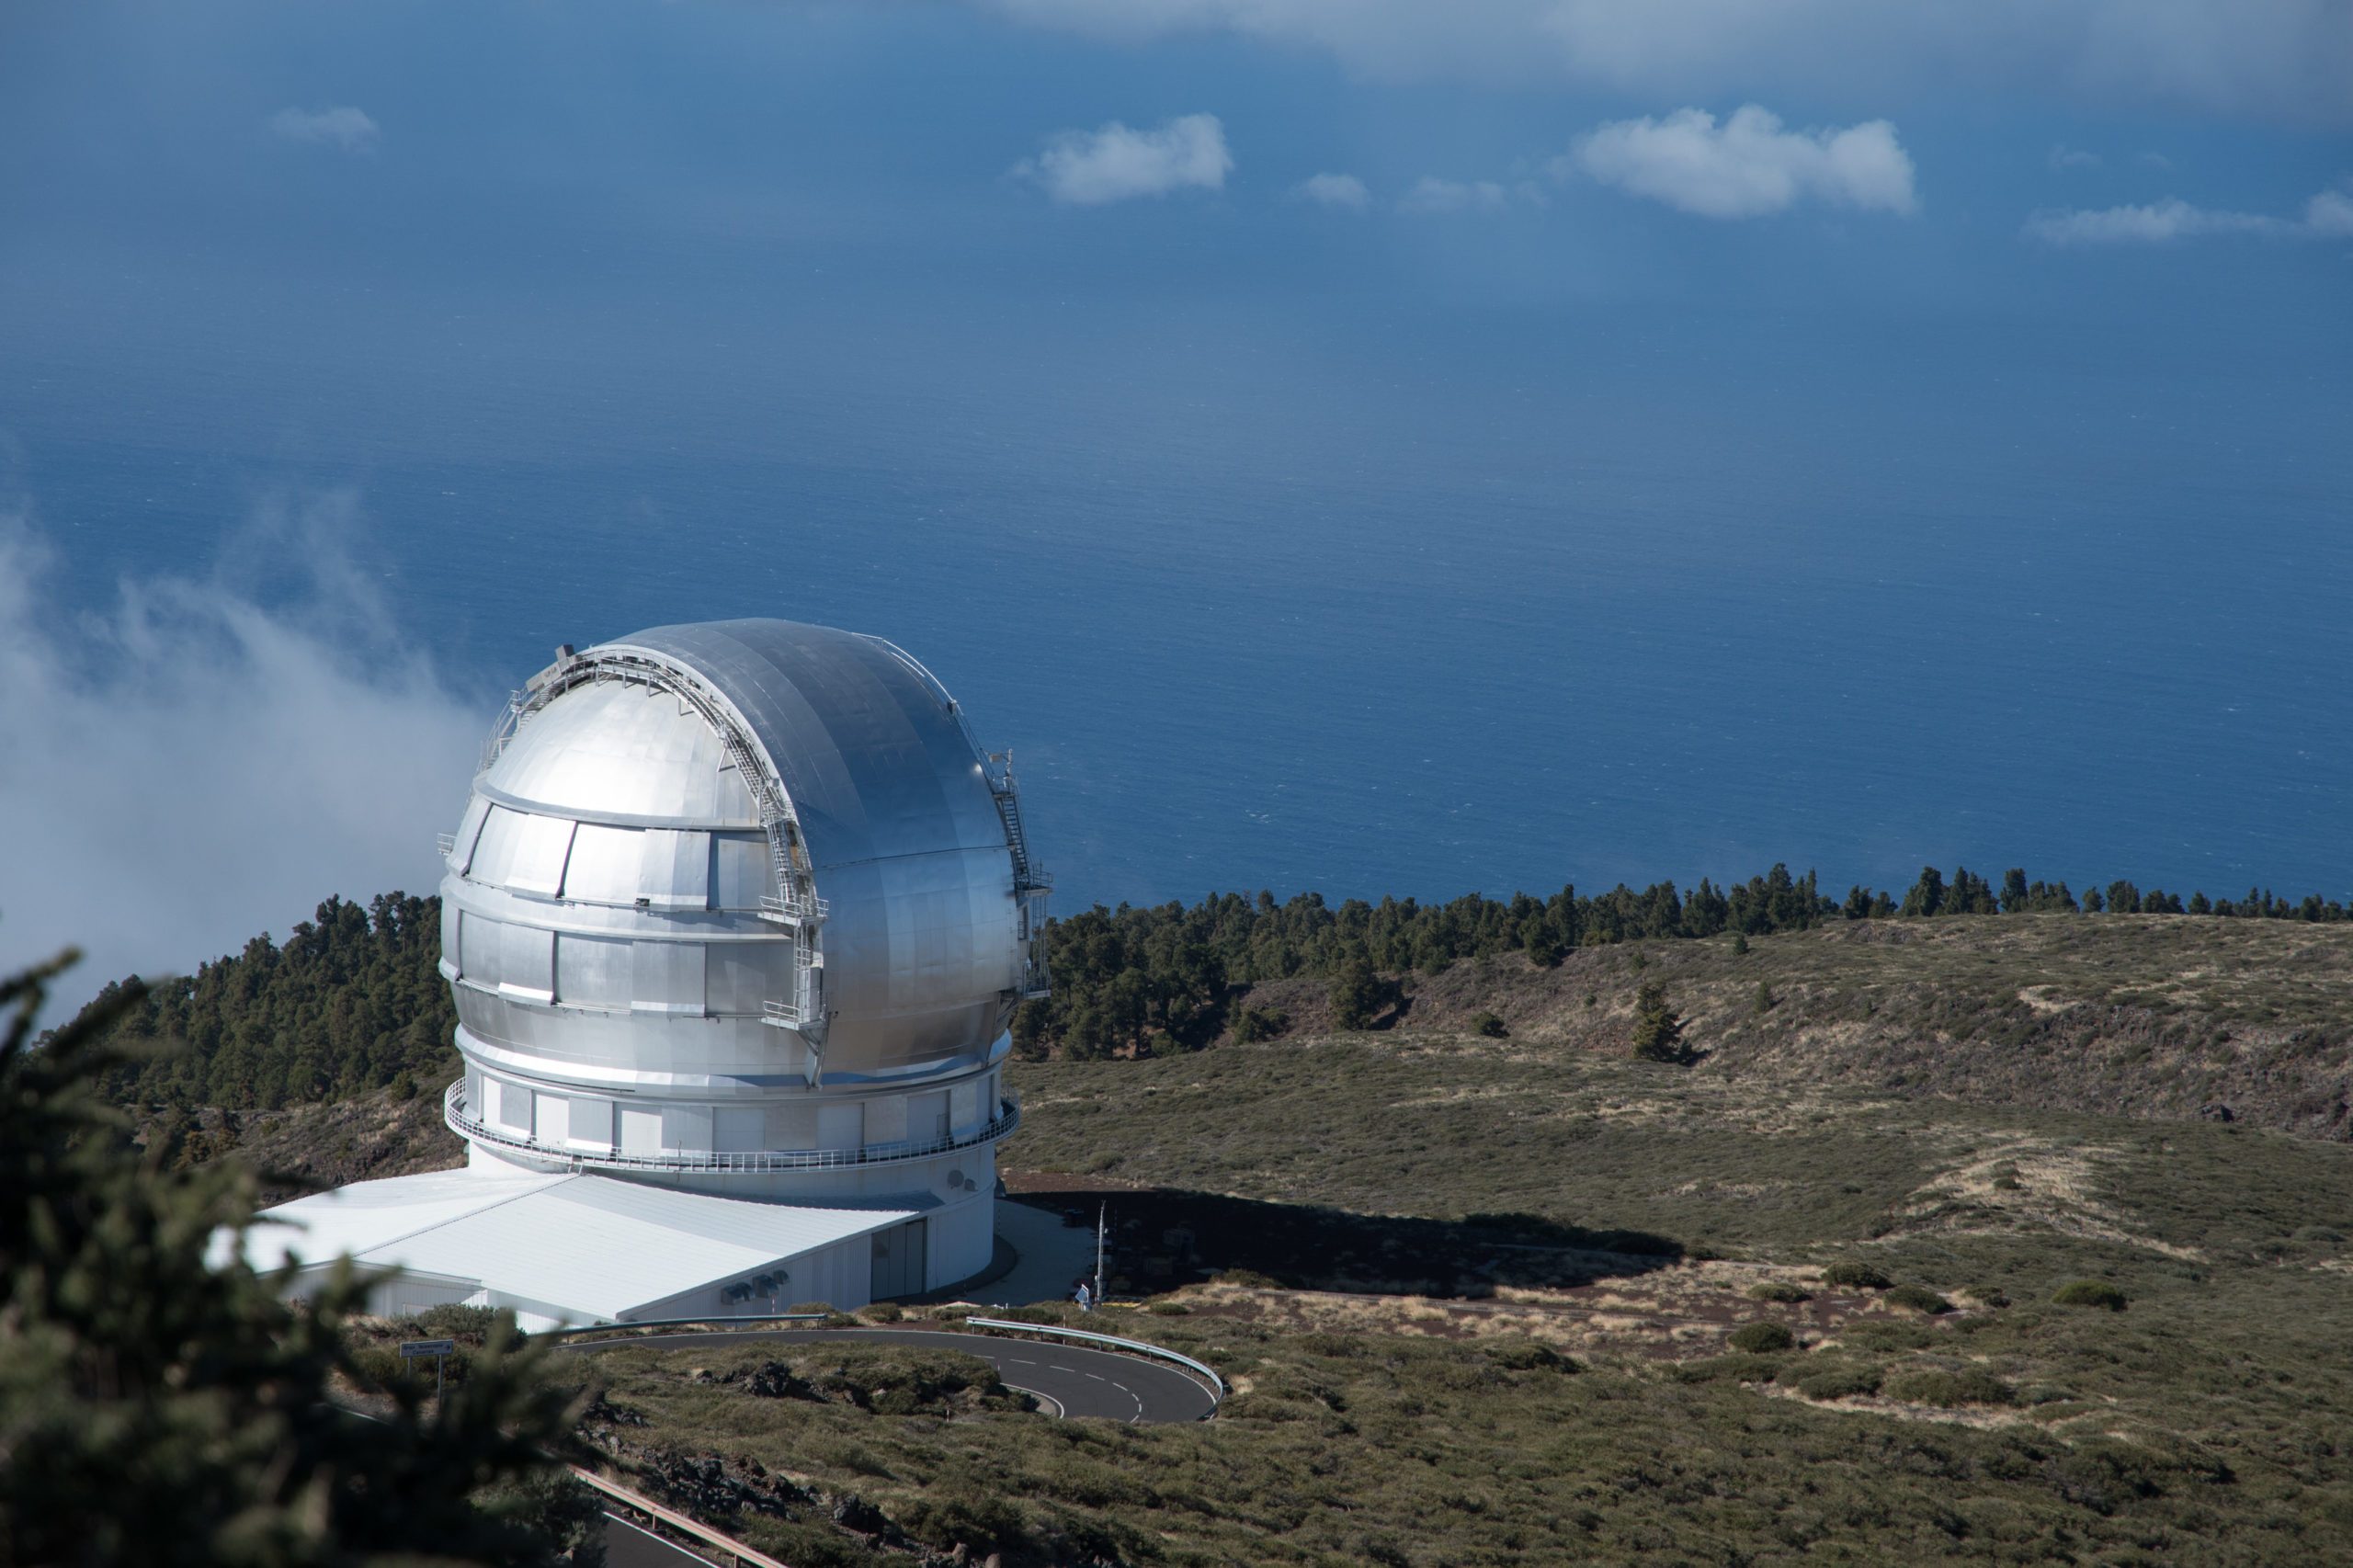 Silbernes Kuppelteleskop auf Insel vor blauem Himmel